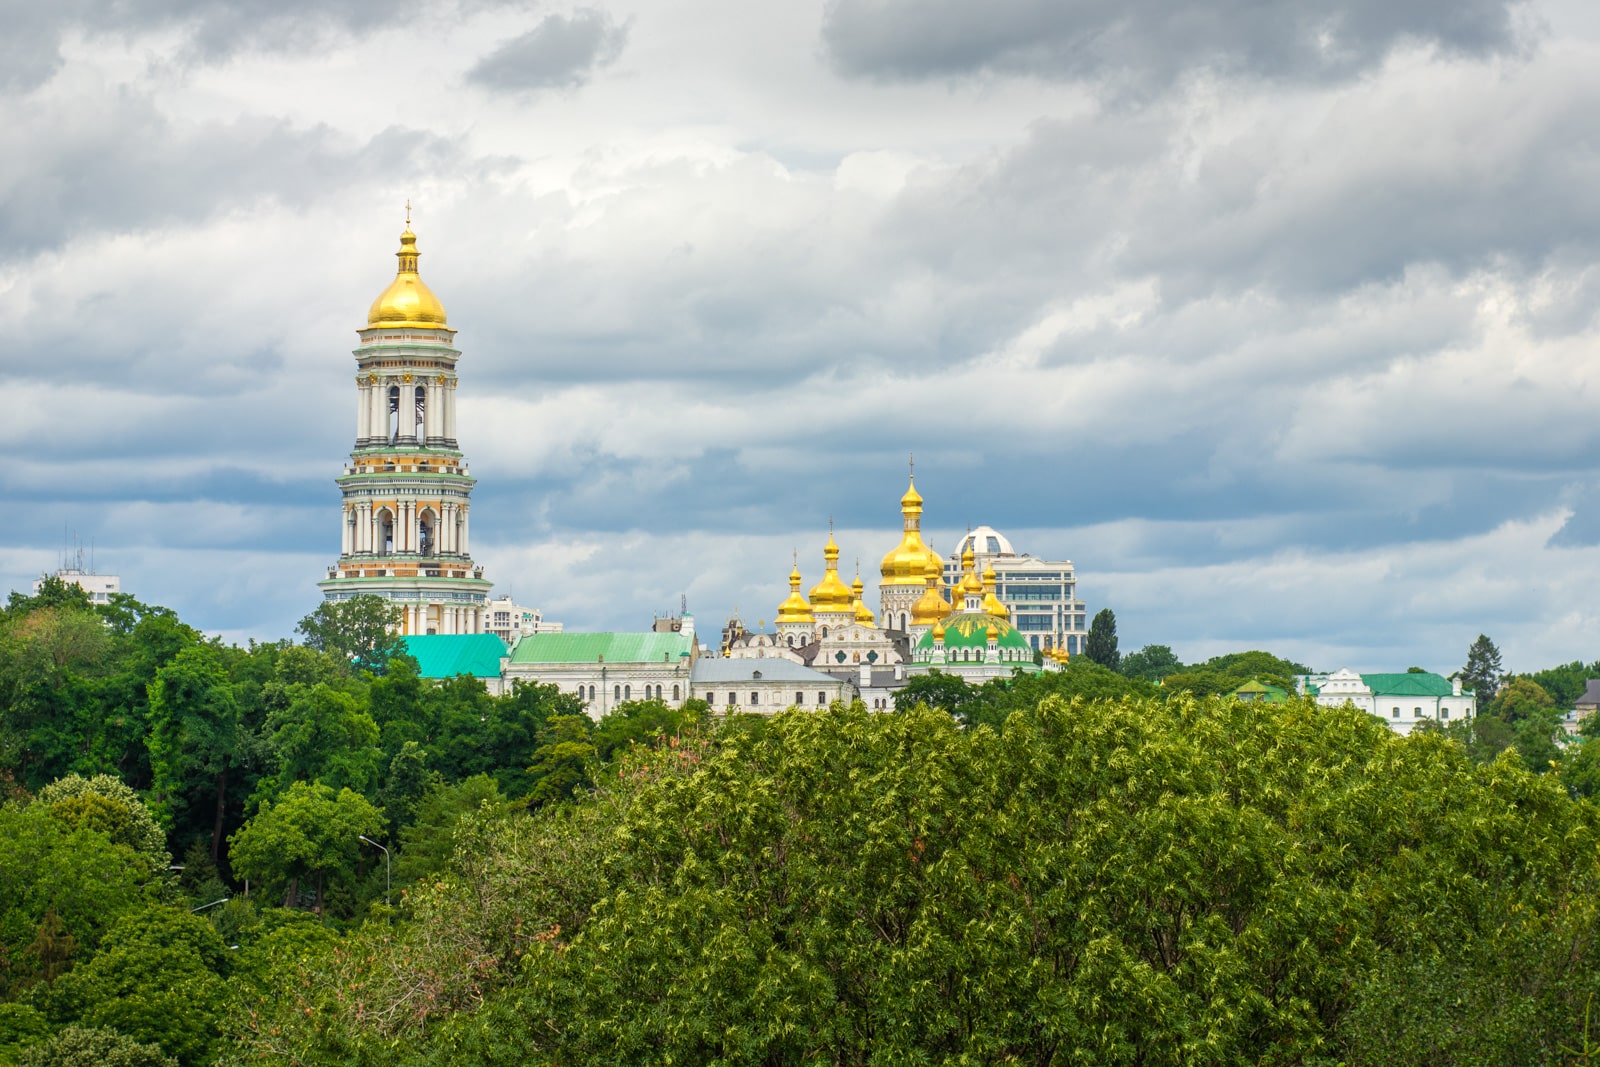 View of Kiev Pechersk Lavra cave monastery through trees in Kyiv, Ukraine